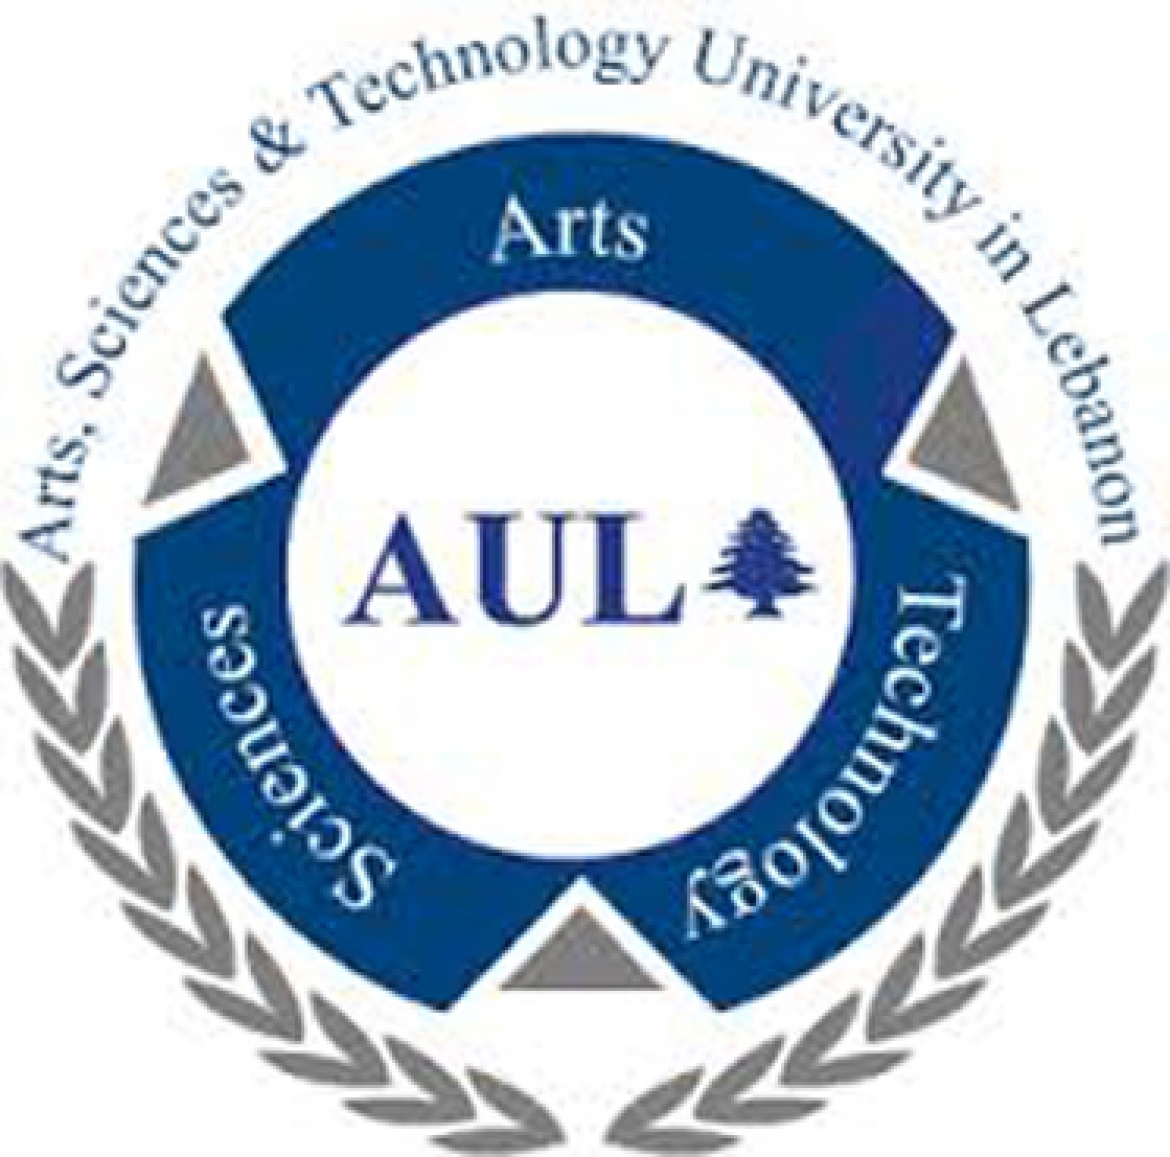 Arts, Sciences & Technology University in Lebanon, AUL